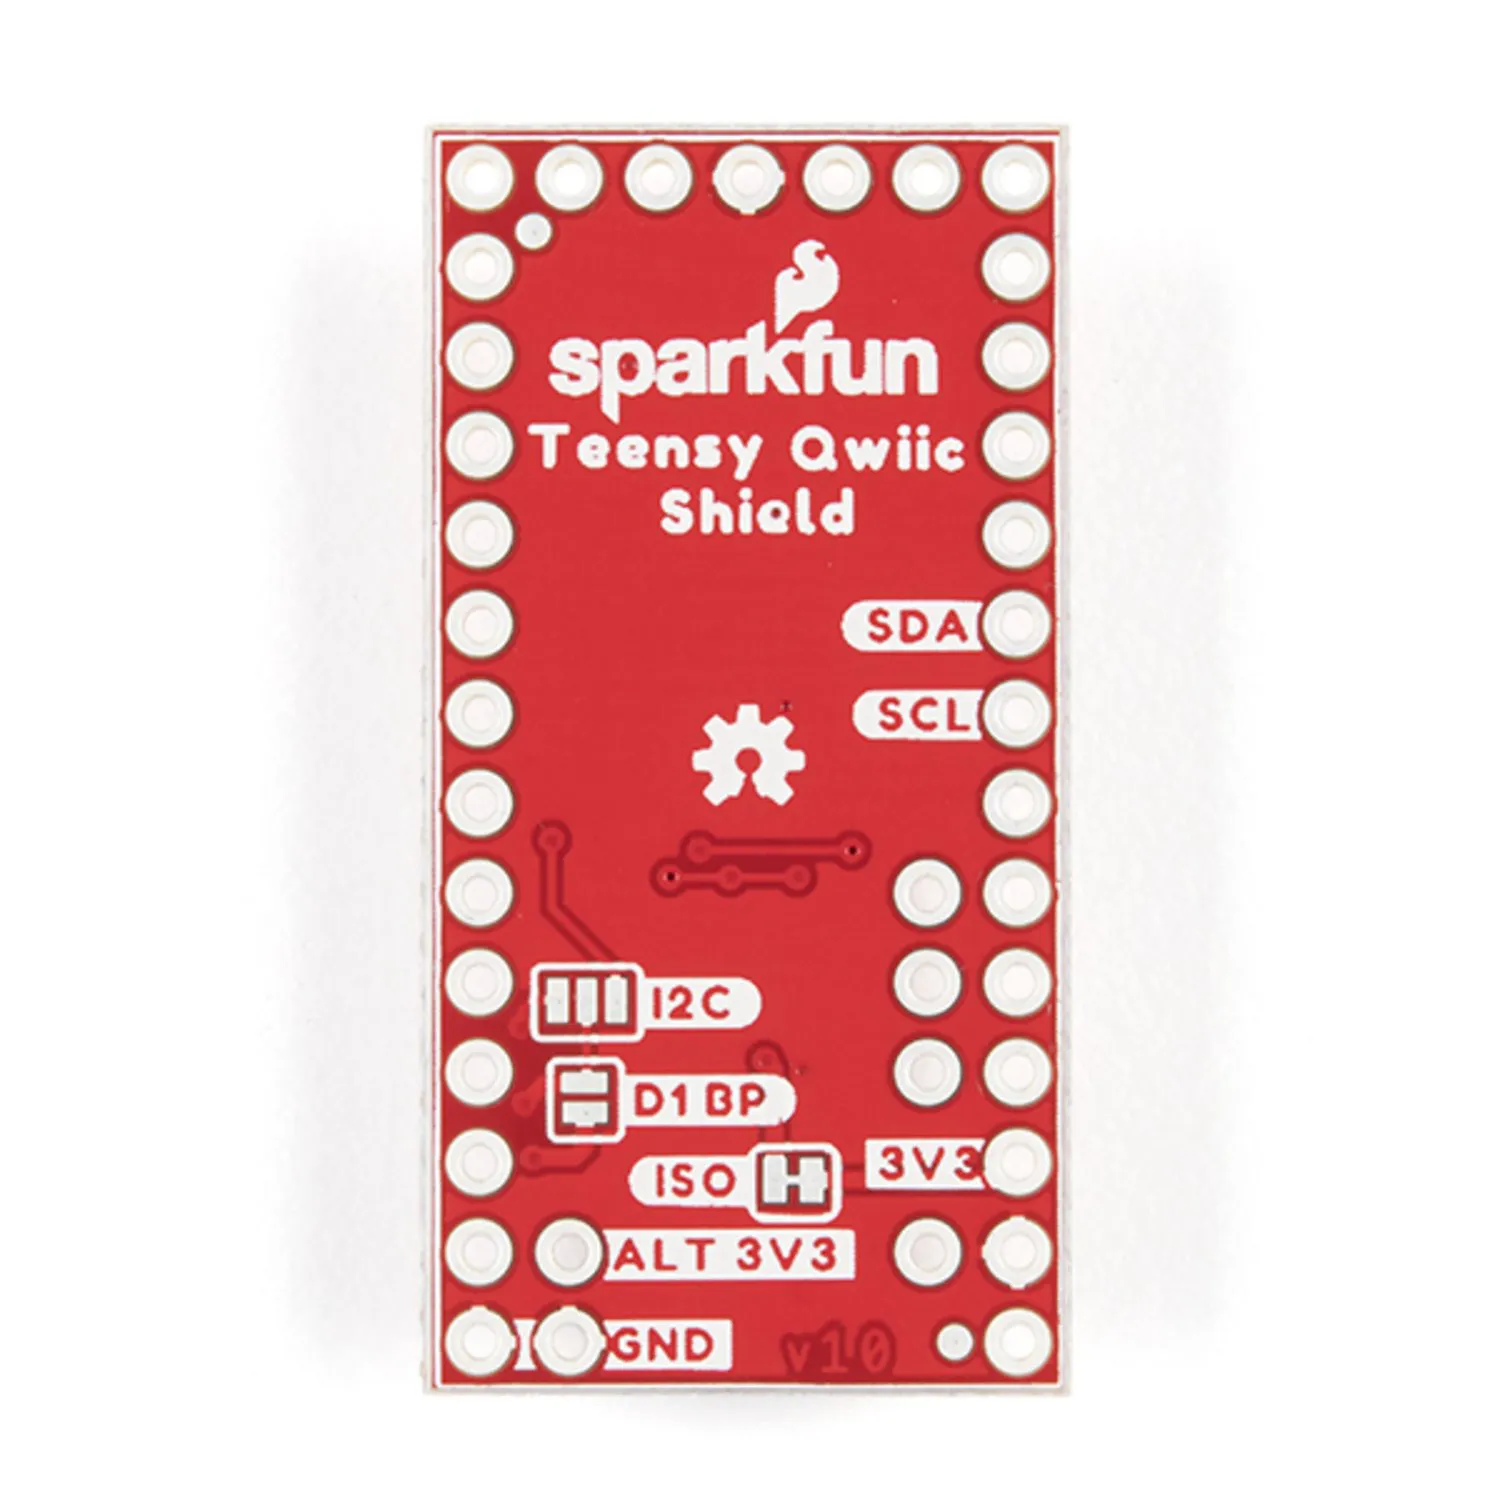 Photo of SparkFun Qwiic Shield for Teensy